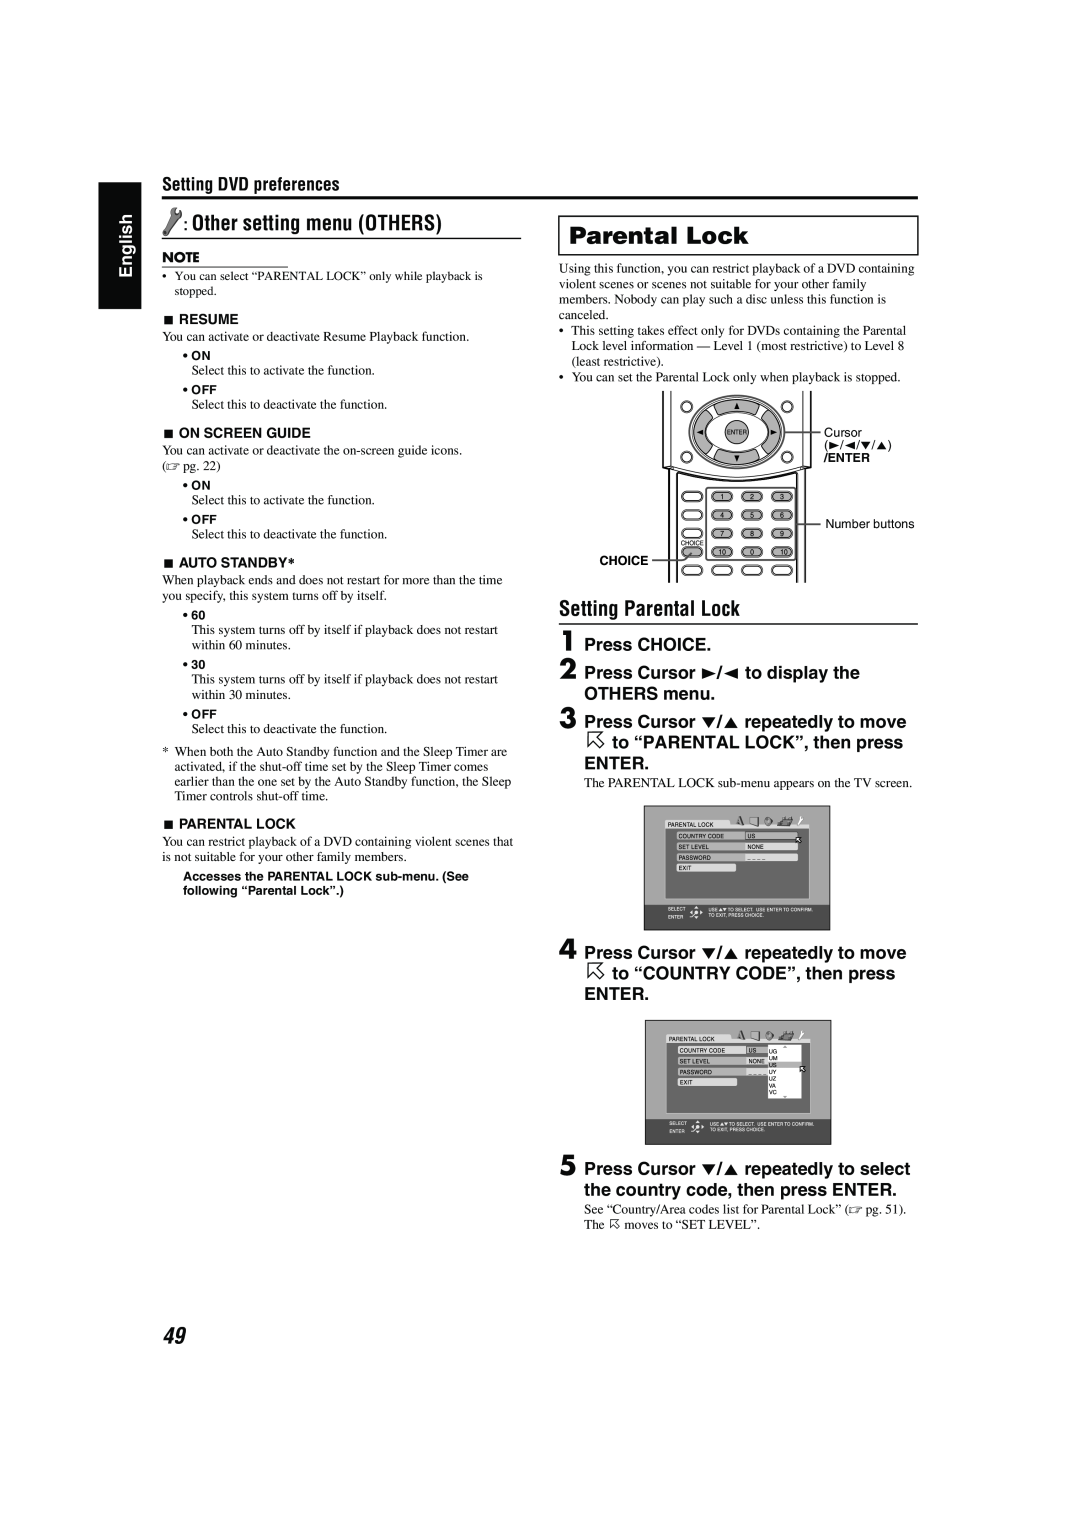 JVC TH-M42 manual Other setting menu OTHERS, Setting Parental Lock, Setting DVD preferences, English, Enter 